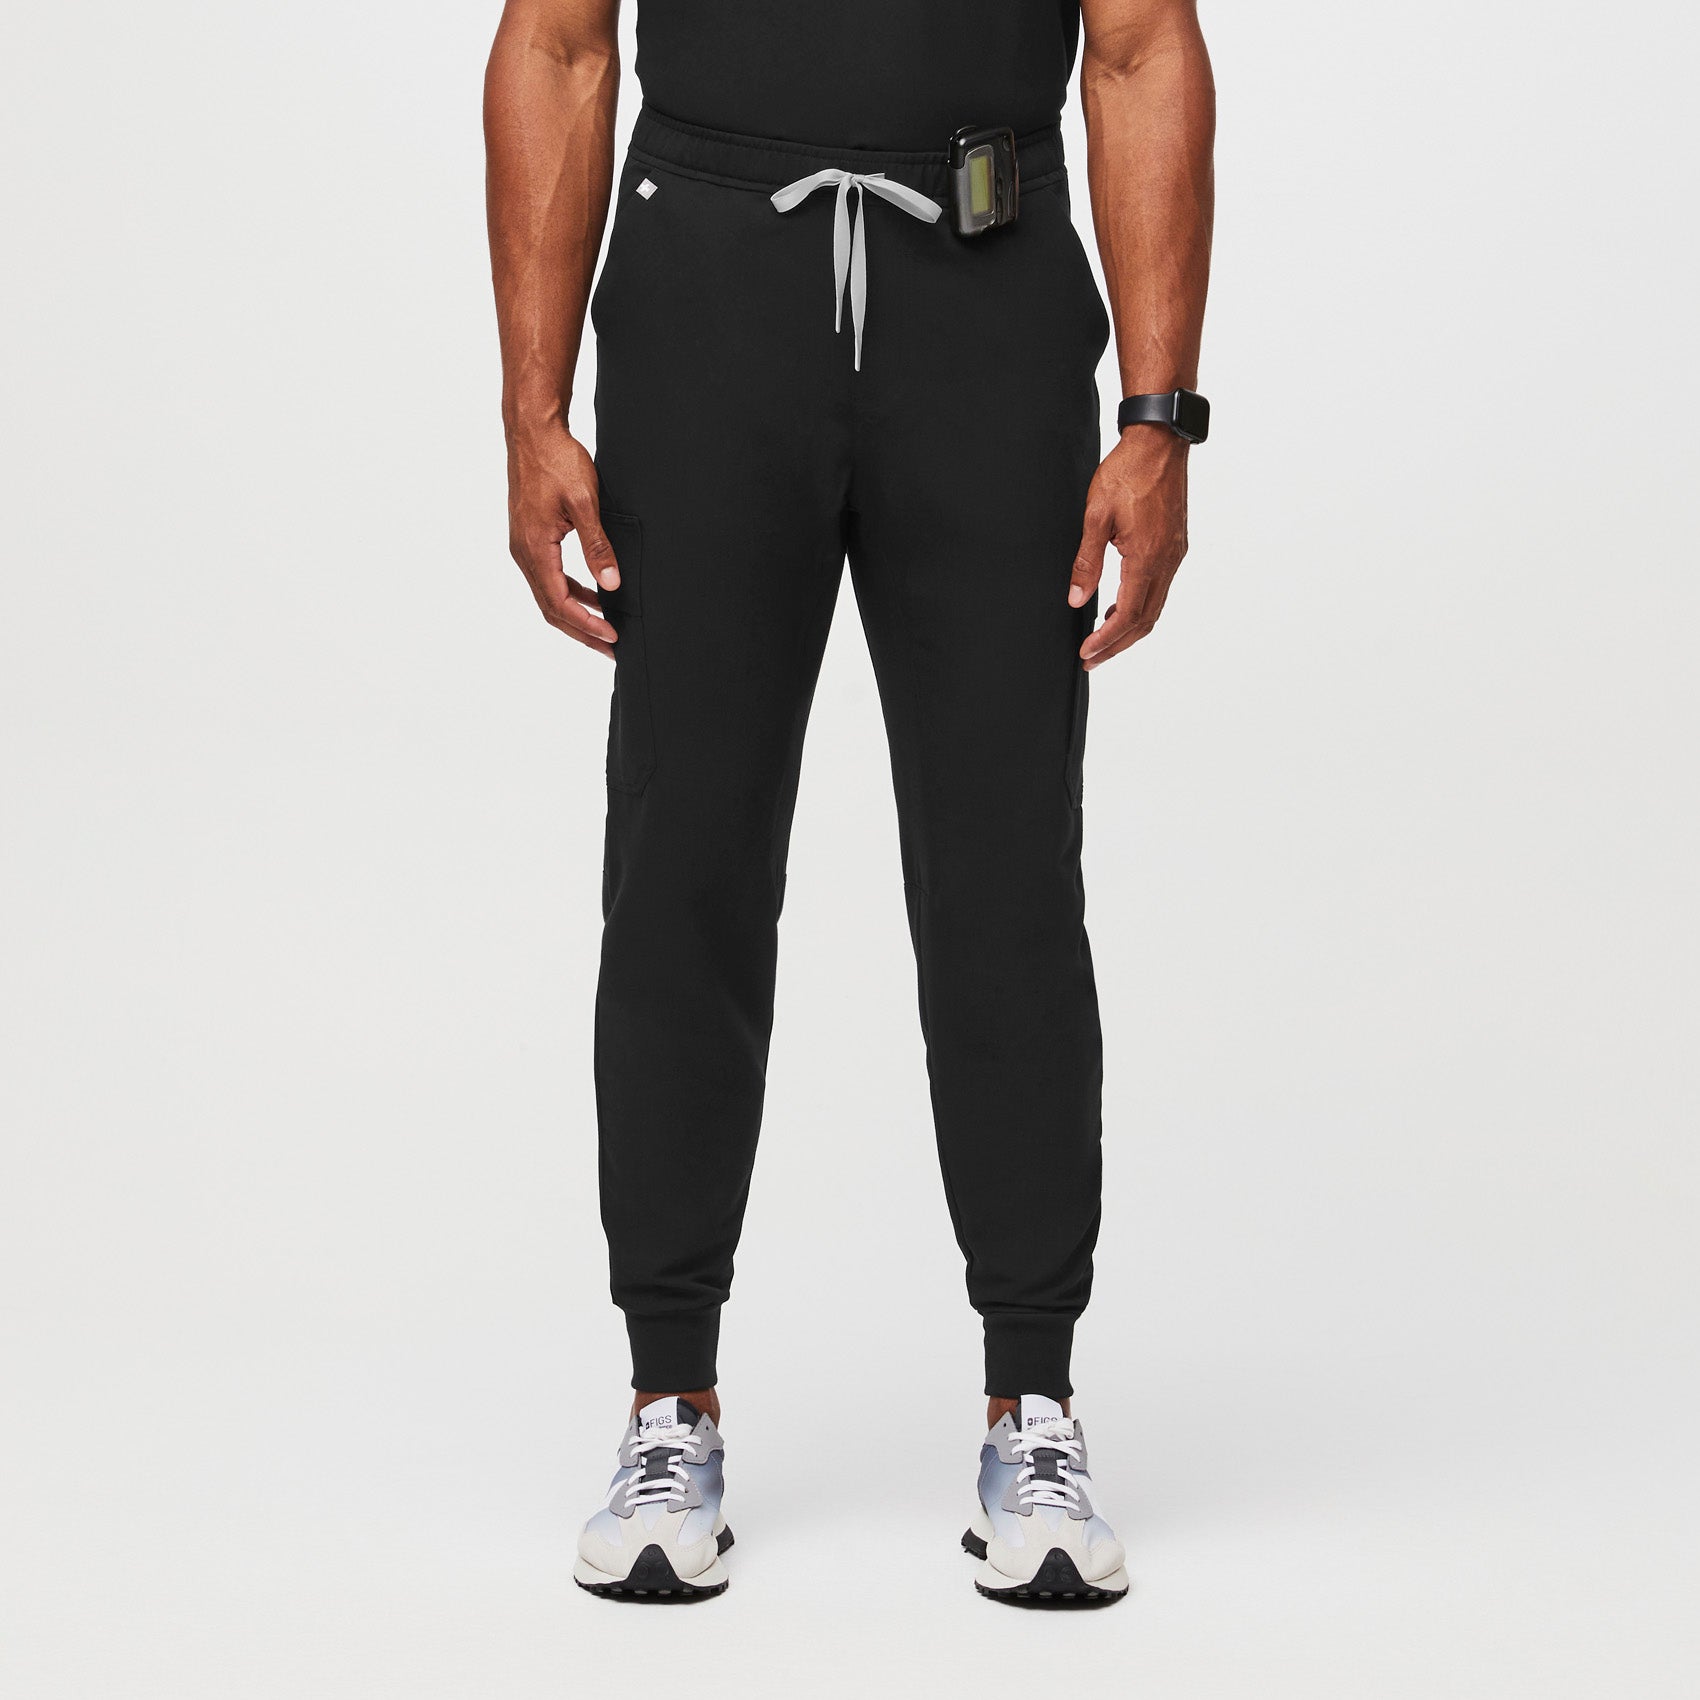 FIGS Men's Tansen 2.0 Jogger Medical Scrub Pants, Ceil Blue XS : :  Clothing, Shoes & Accessories